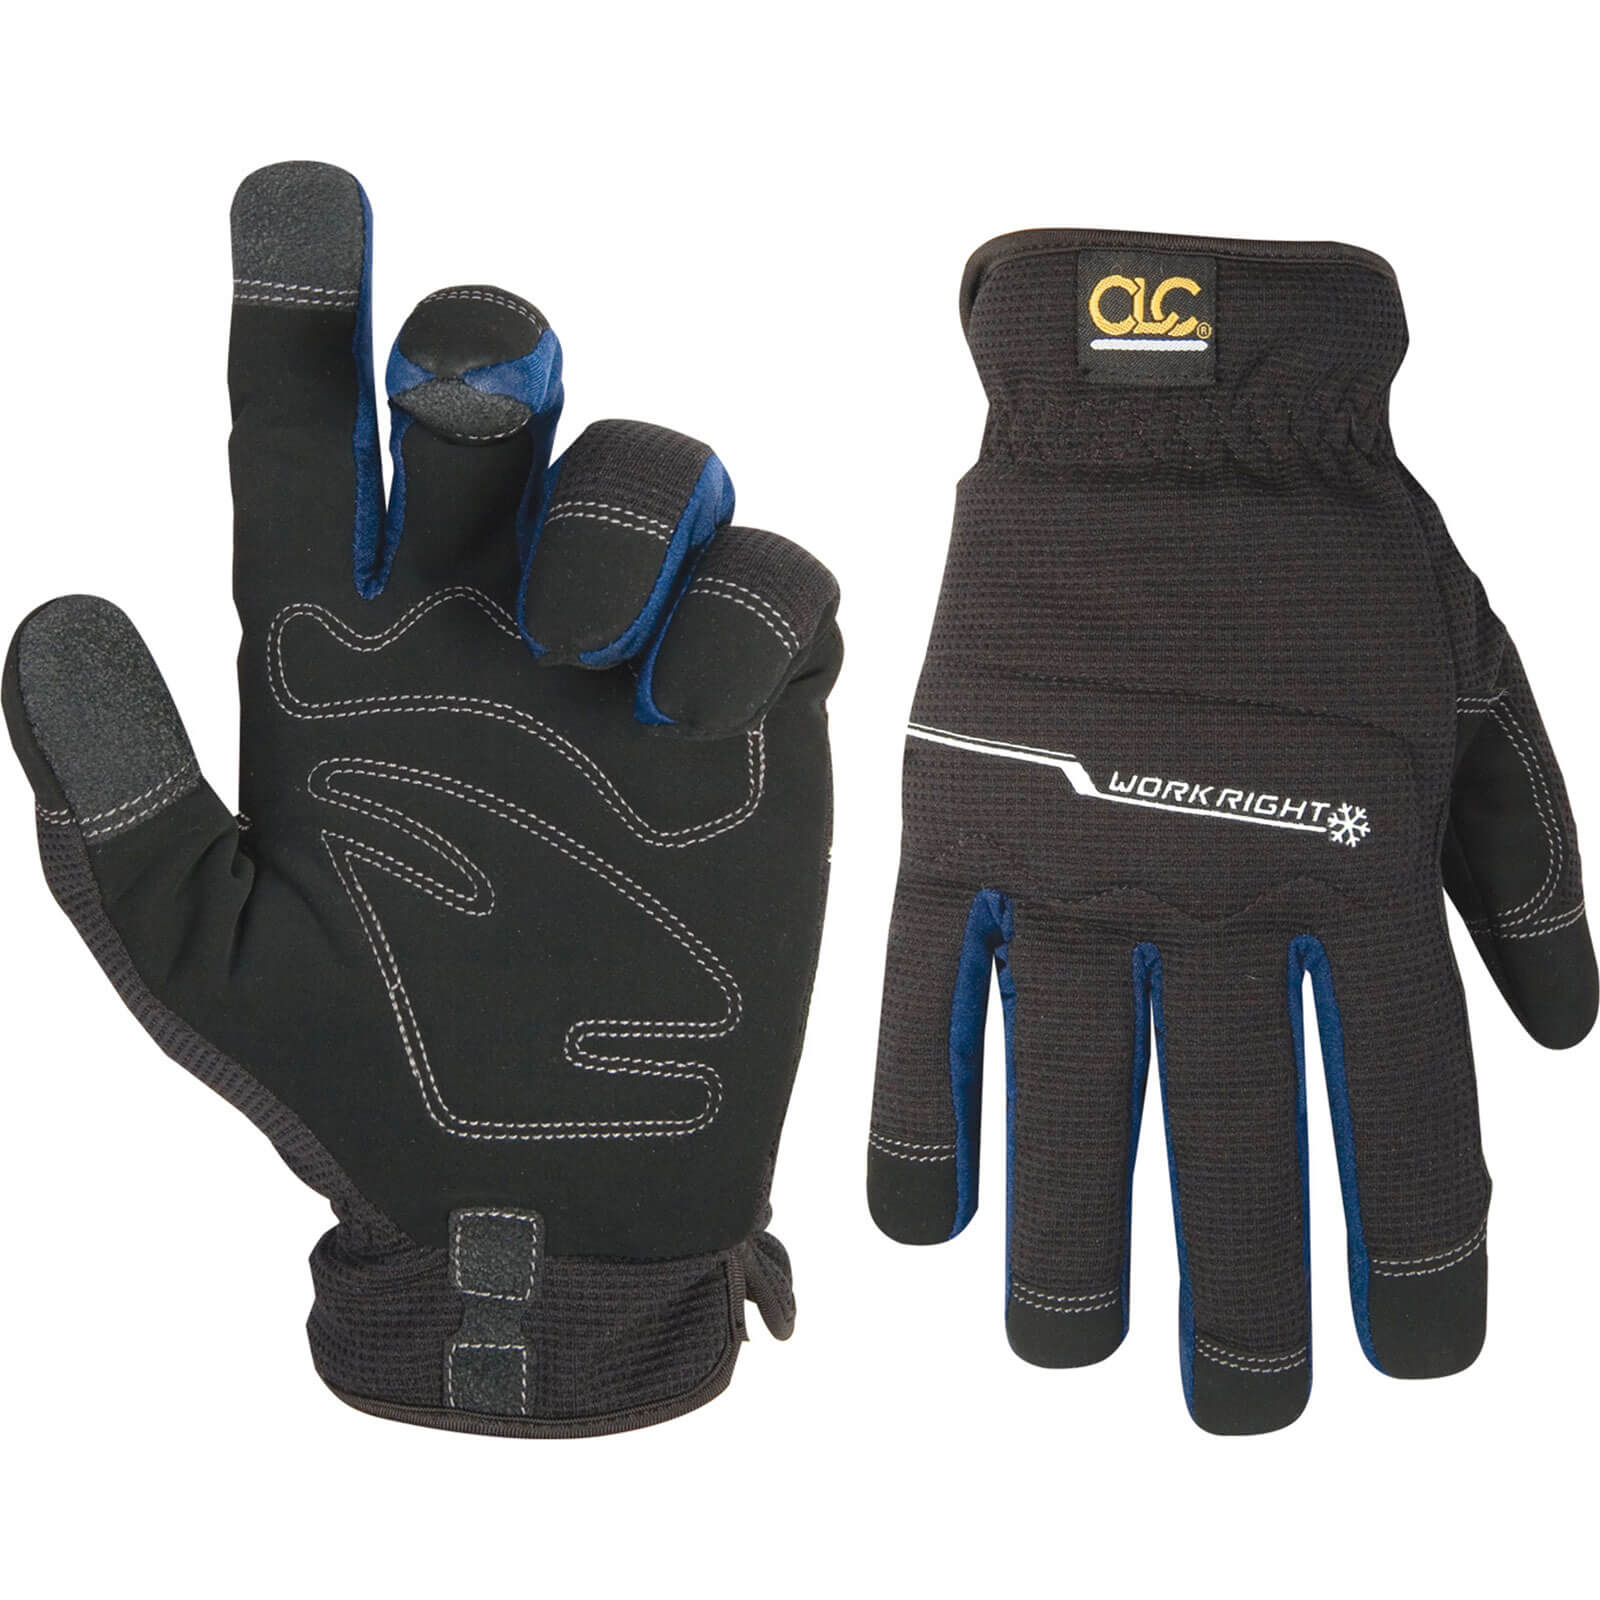 Image of Kunys Flex Grip Workright Lined Winter Gloves Black XL